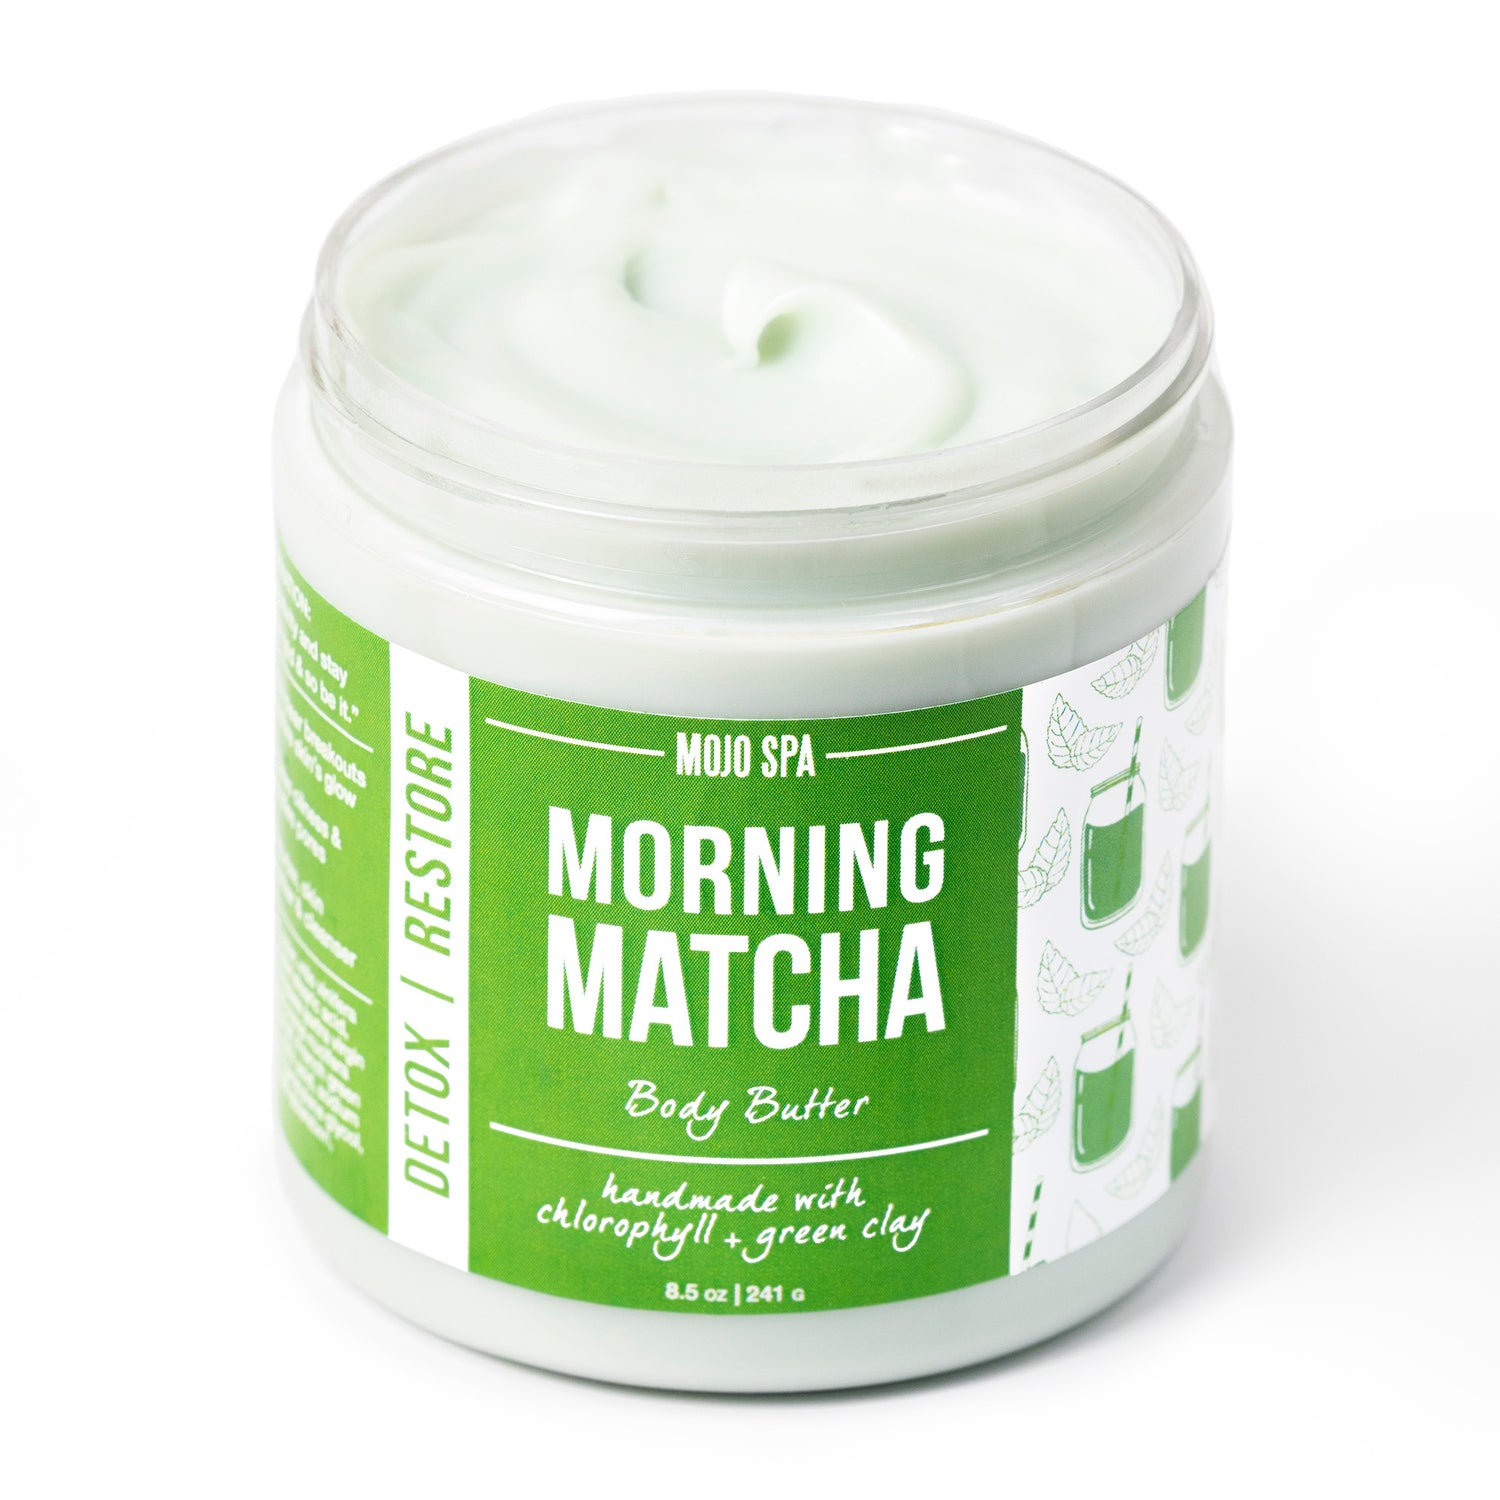 Morning Matcha Body Butter